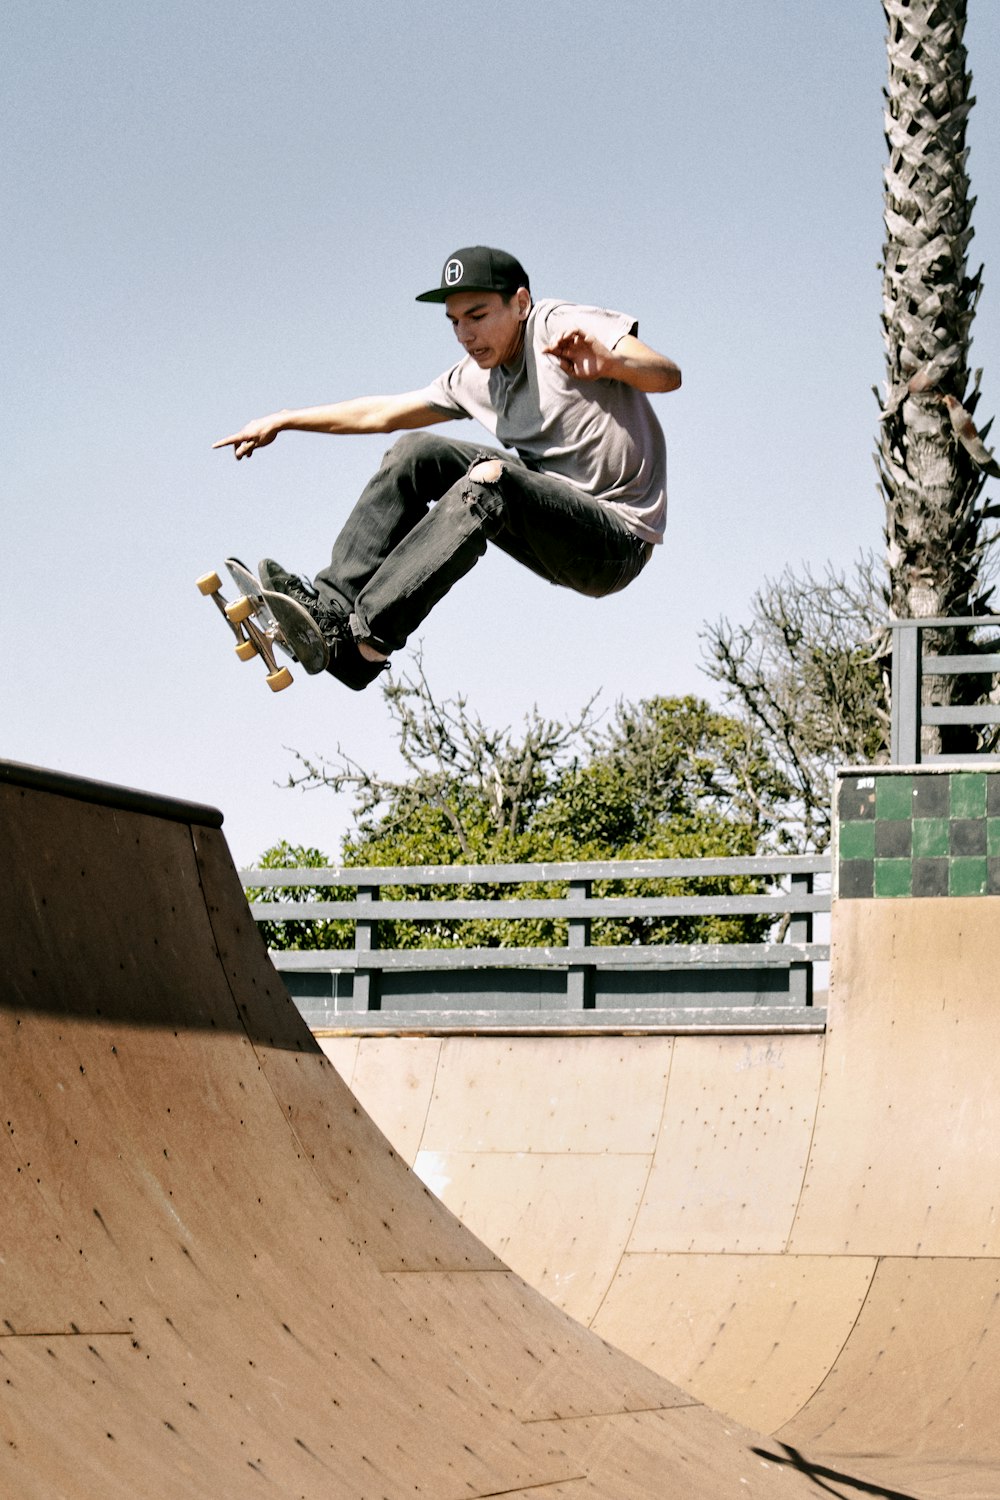 man performing skateboard tricks